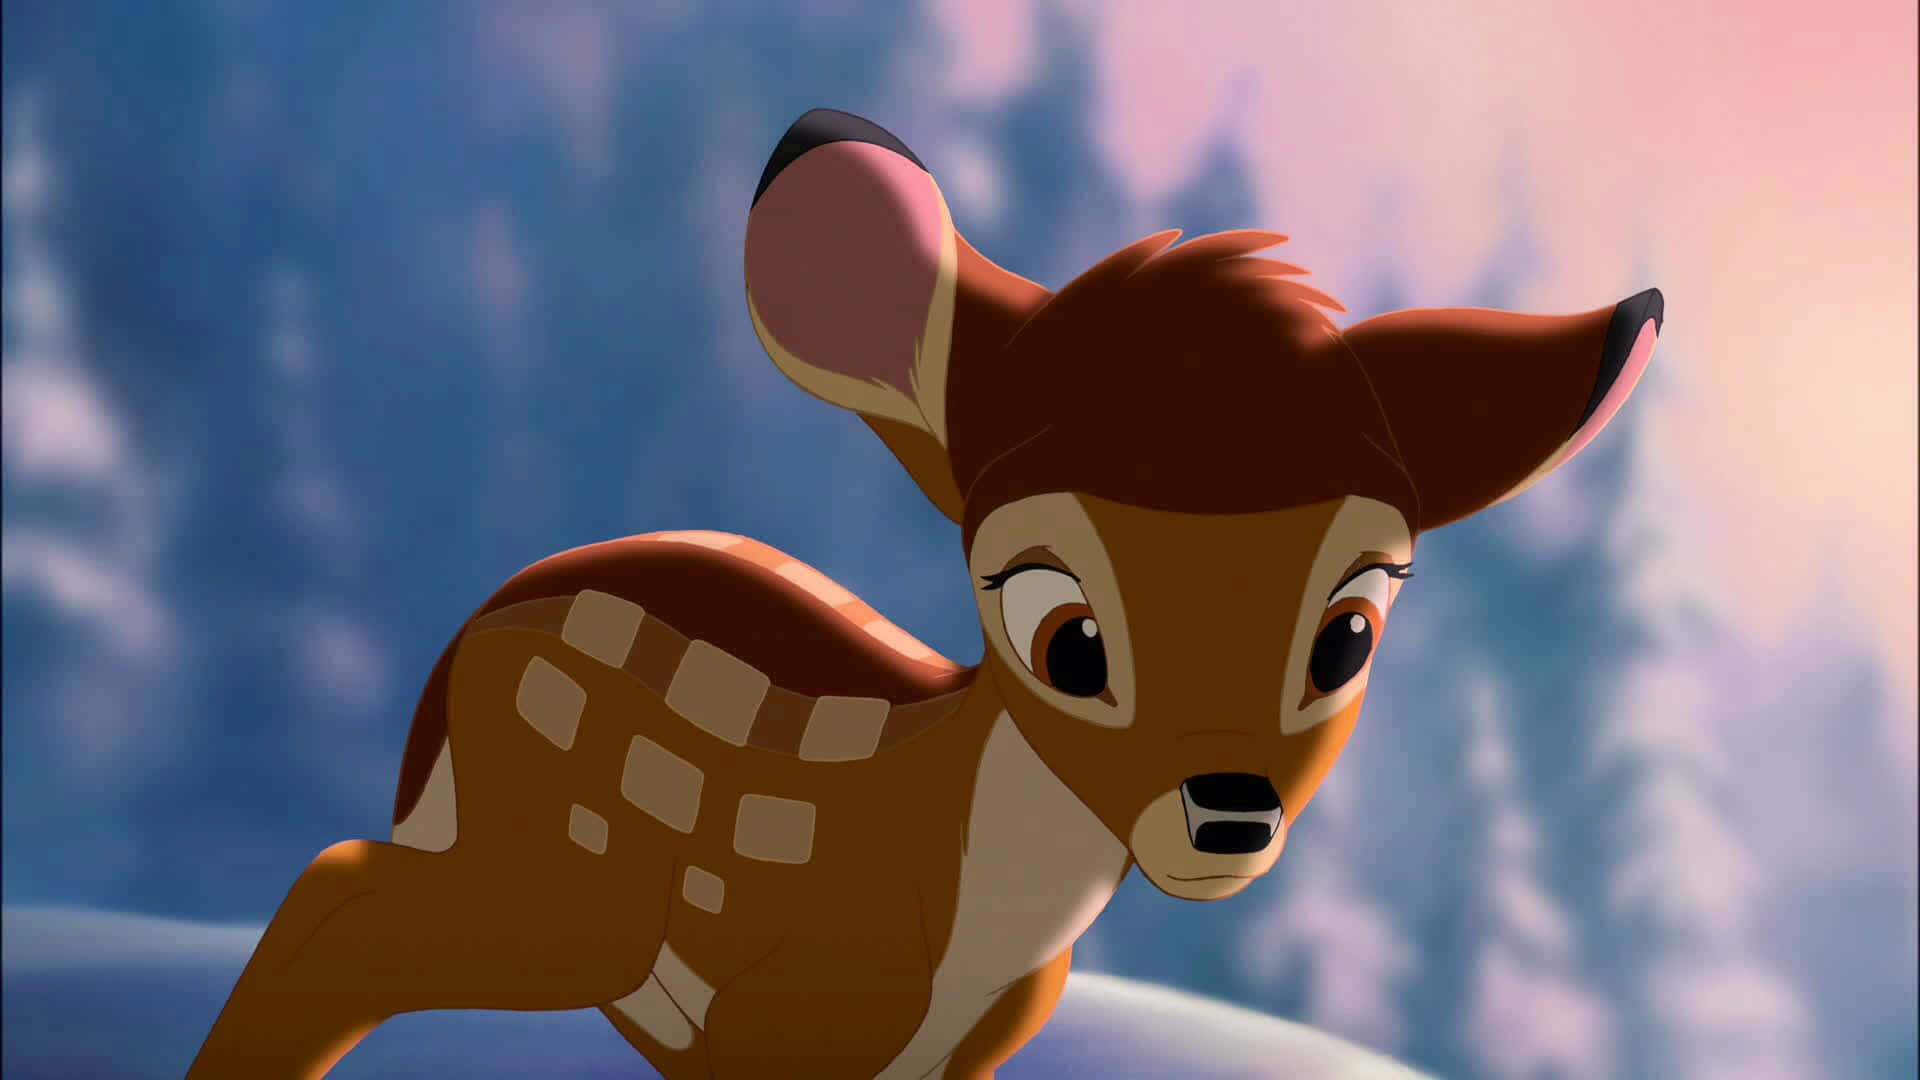 Eineherzergreifende Szene Aus Disneys Klassiker Bambi